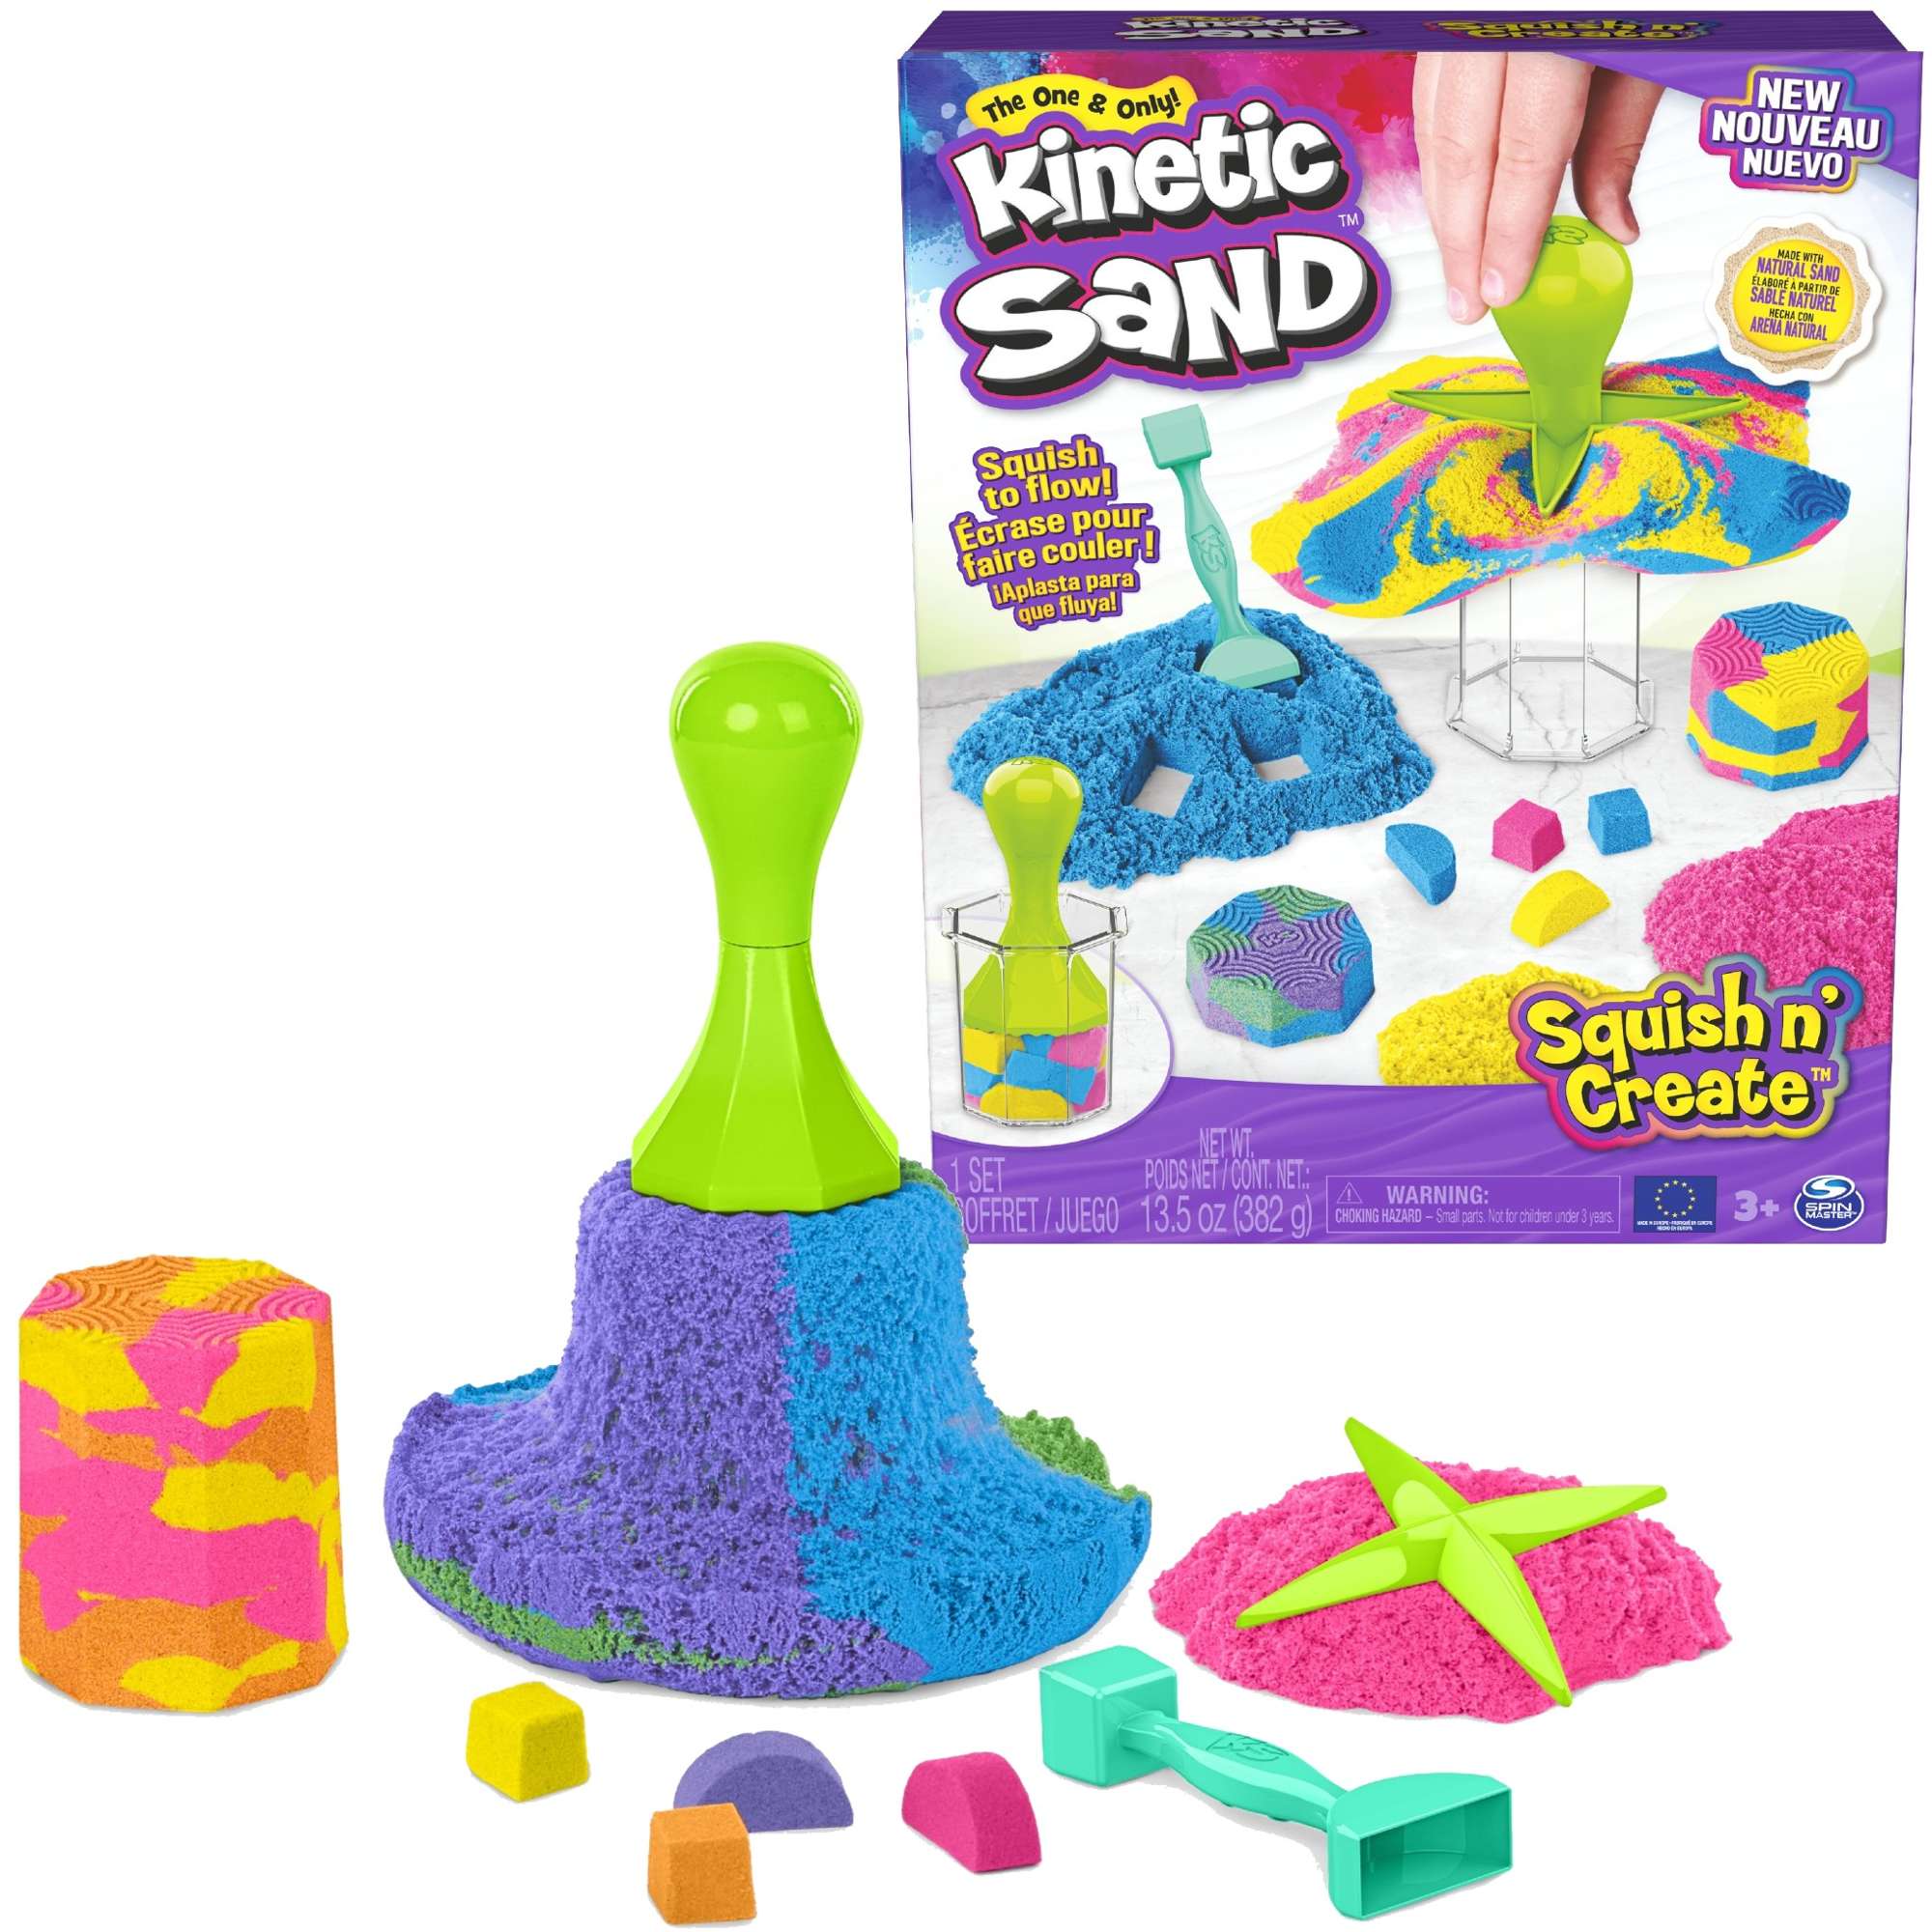 Piasek Kinetyczny Zestaw Kinetic Sand Squish n' Create + akcesoria